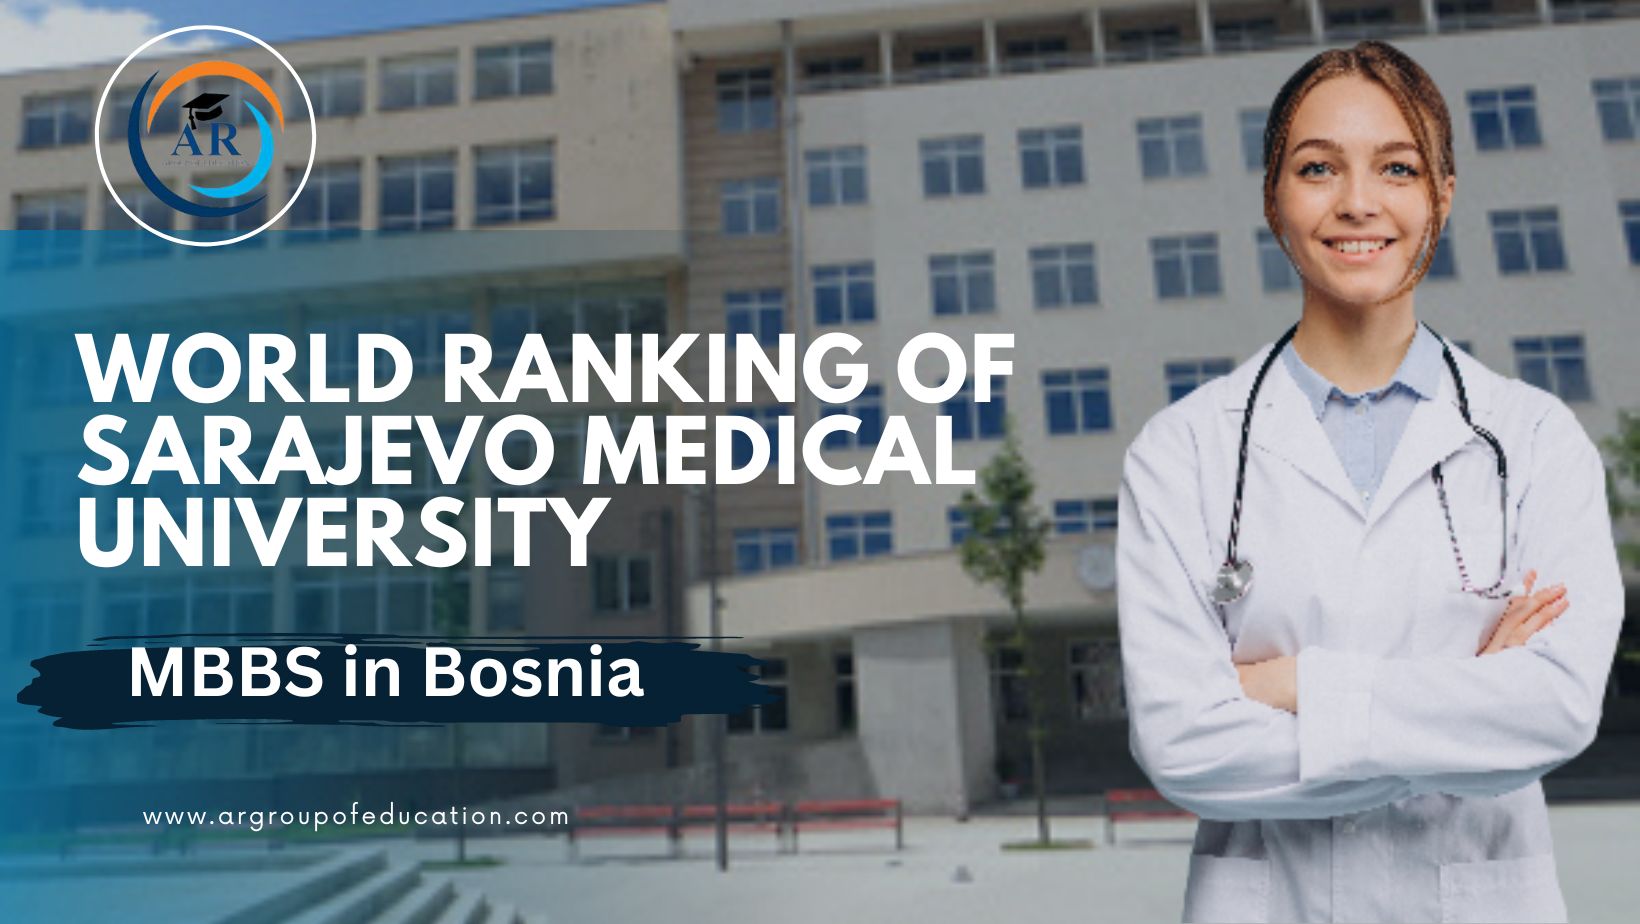 World Ranking of Sarajevo Medical University's